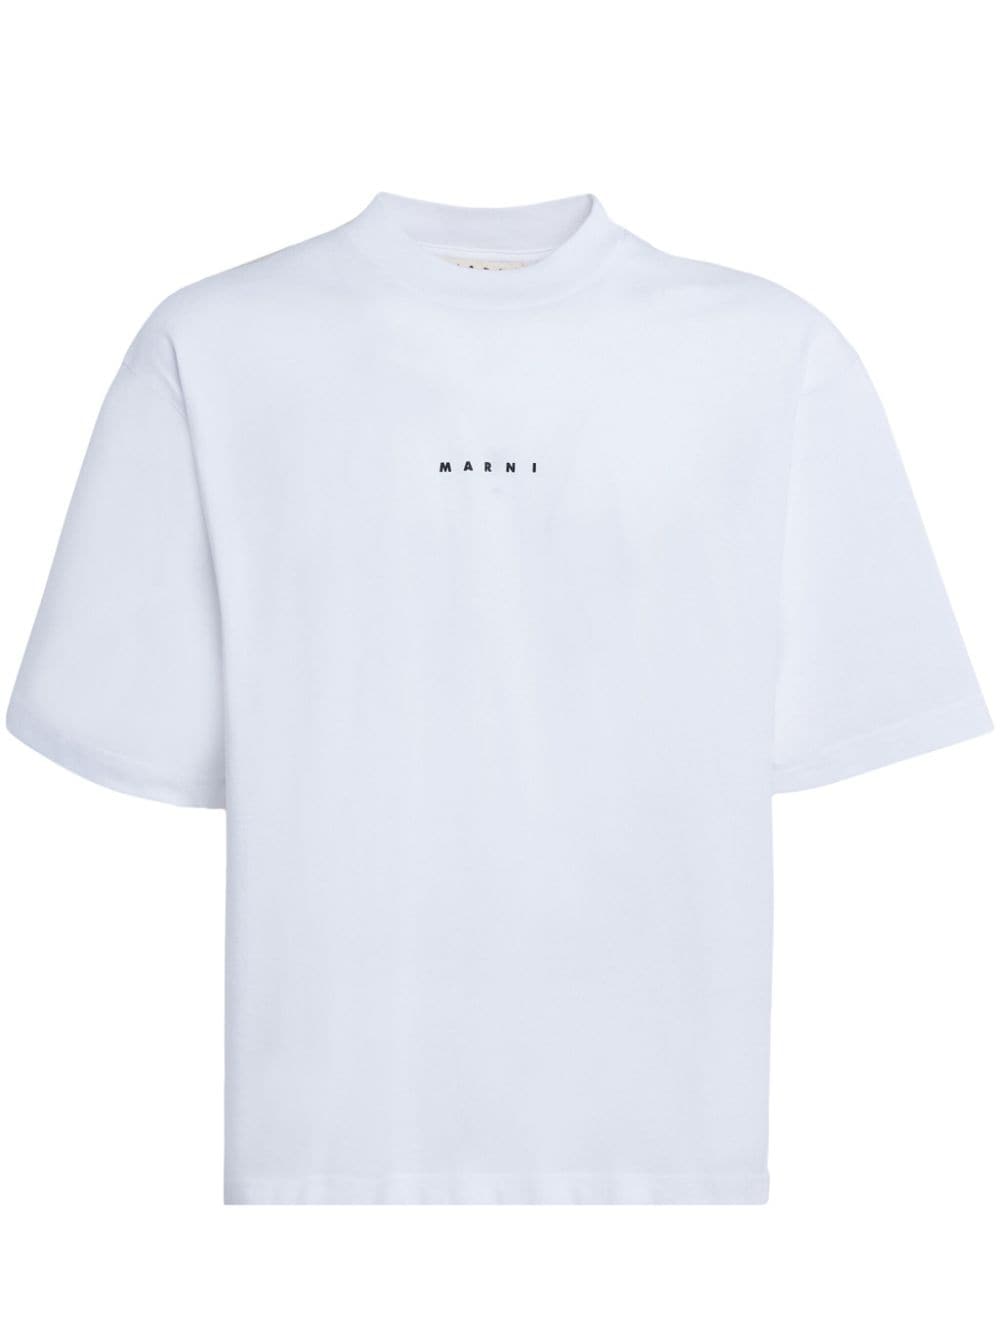 Marni - T-Shirt blanc à logo - Lothaire